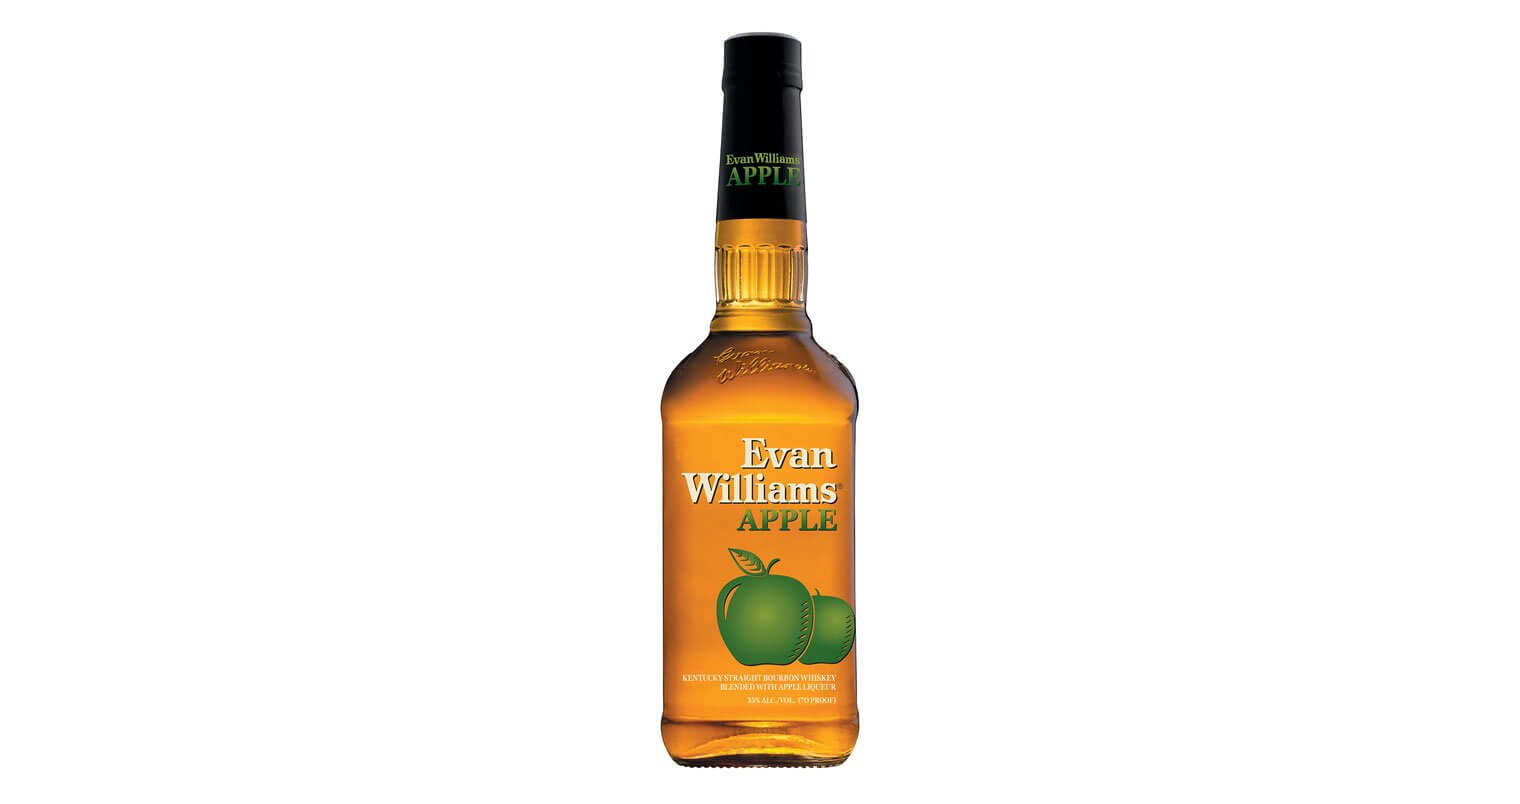 Evan Williams Apple, bottle on white, featured image